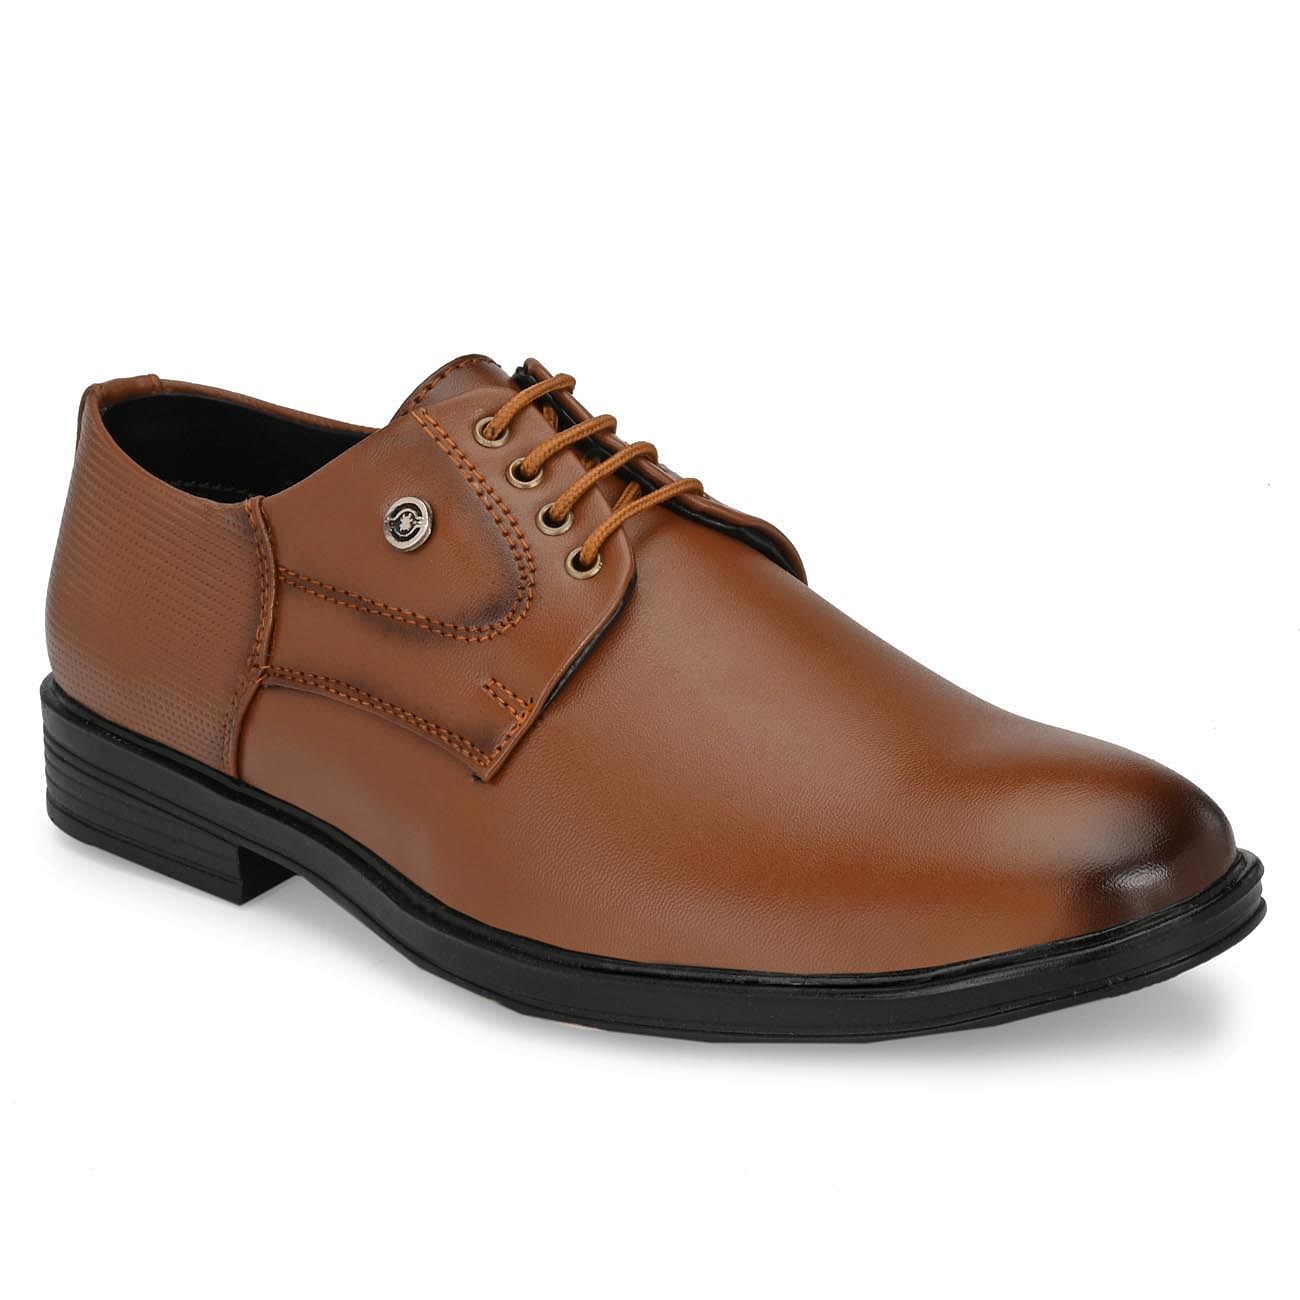 Pair-it Men derby Formal Shoes - Tan - MN-RYDER211